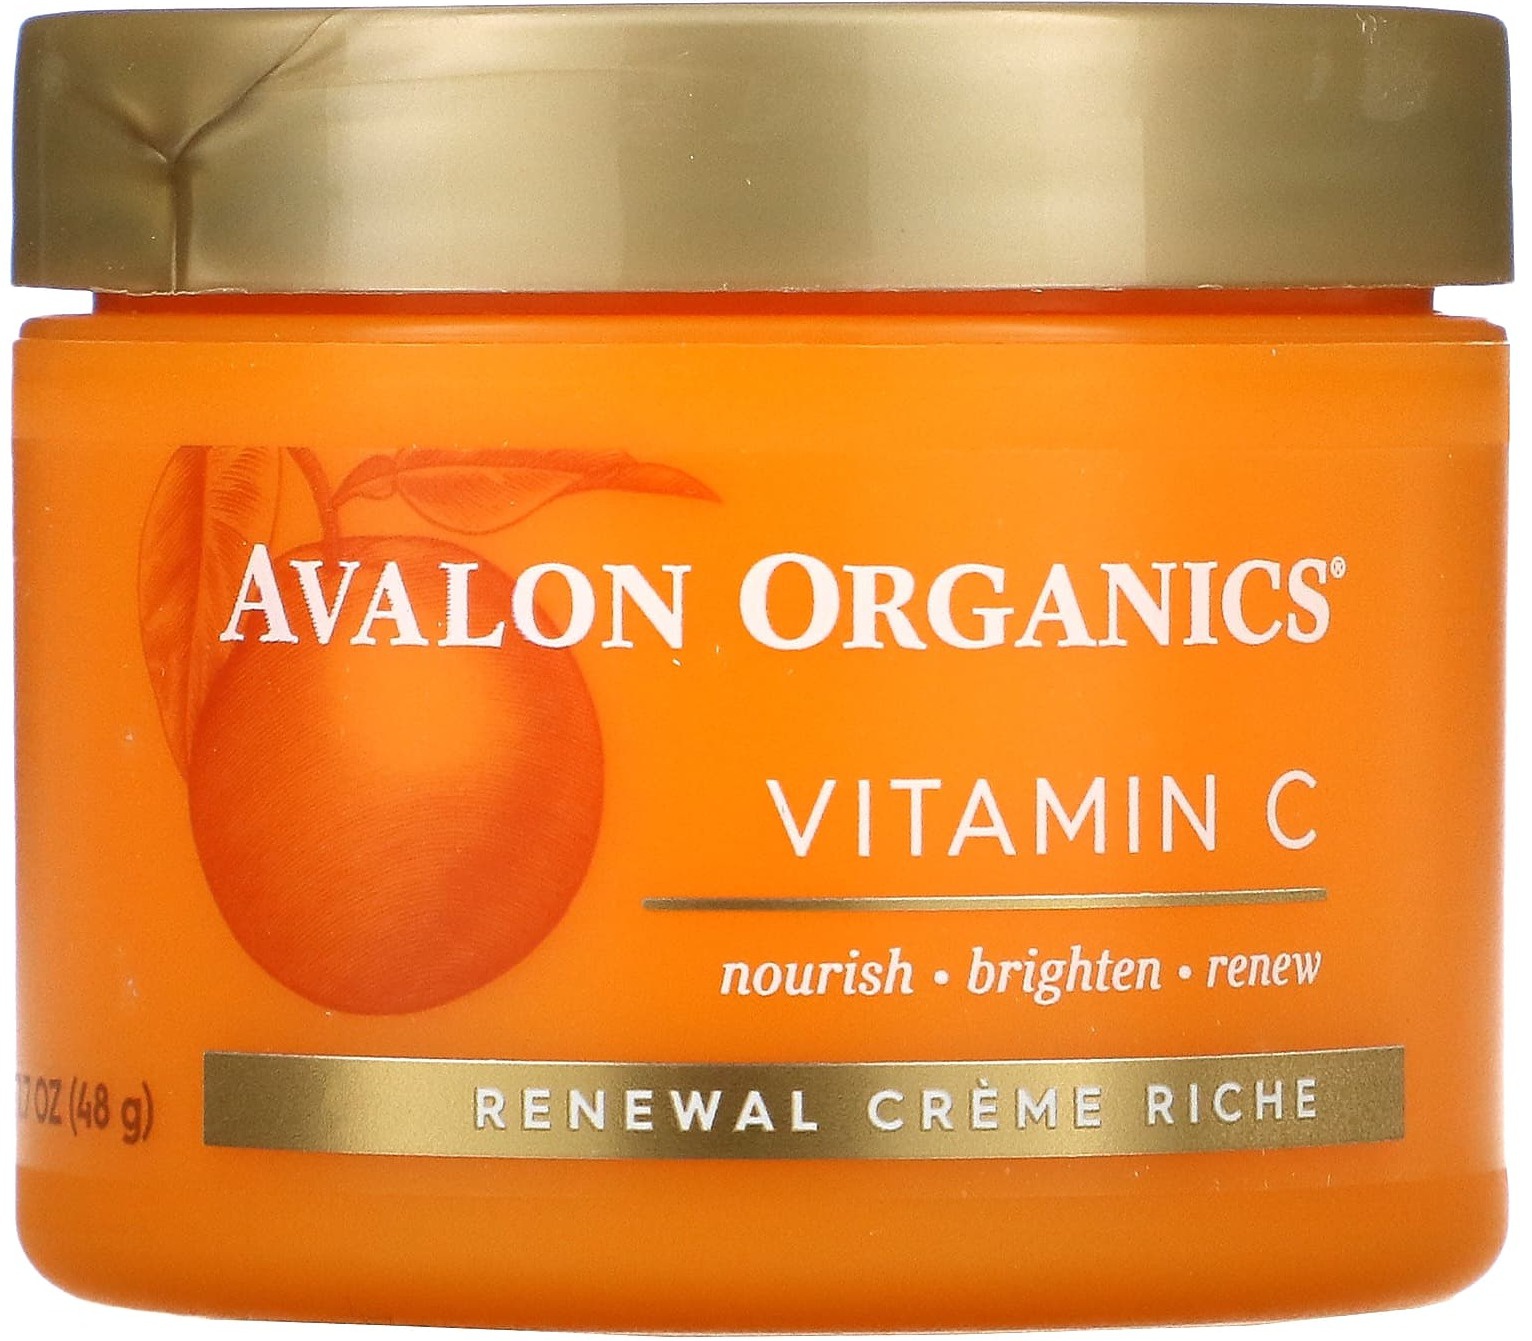 Avalon Organics Vitamin C Renewal Crème Riche